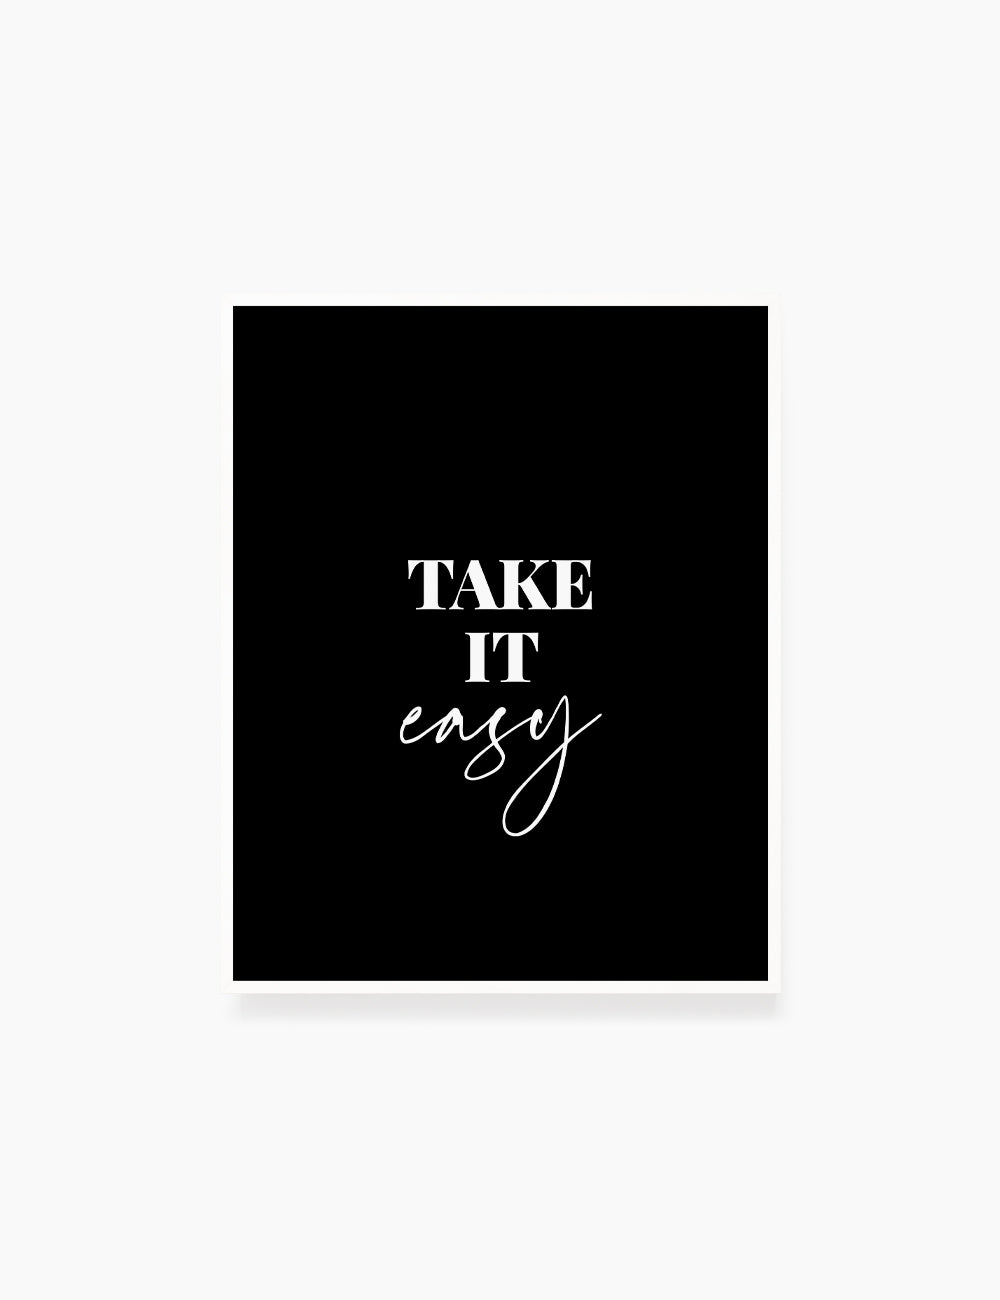 Printable Wall Art Quote: TAKE IT EASY. Printable Poster. Inspiring. Uplifting. WA044 - Paper Moon Art & Design